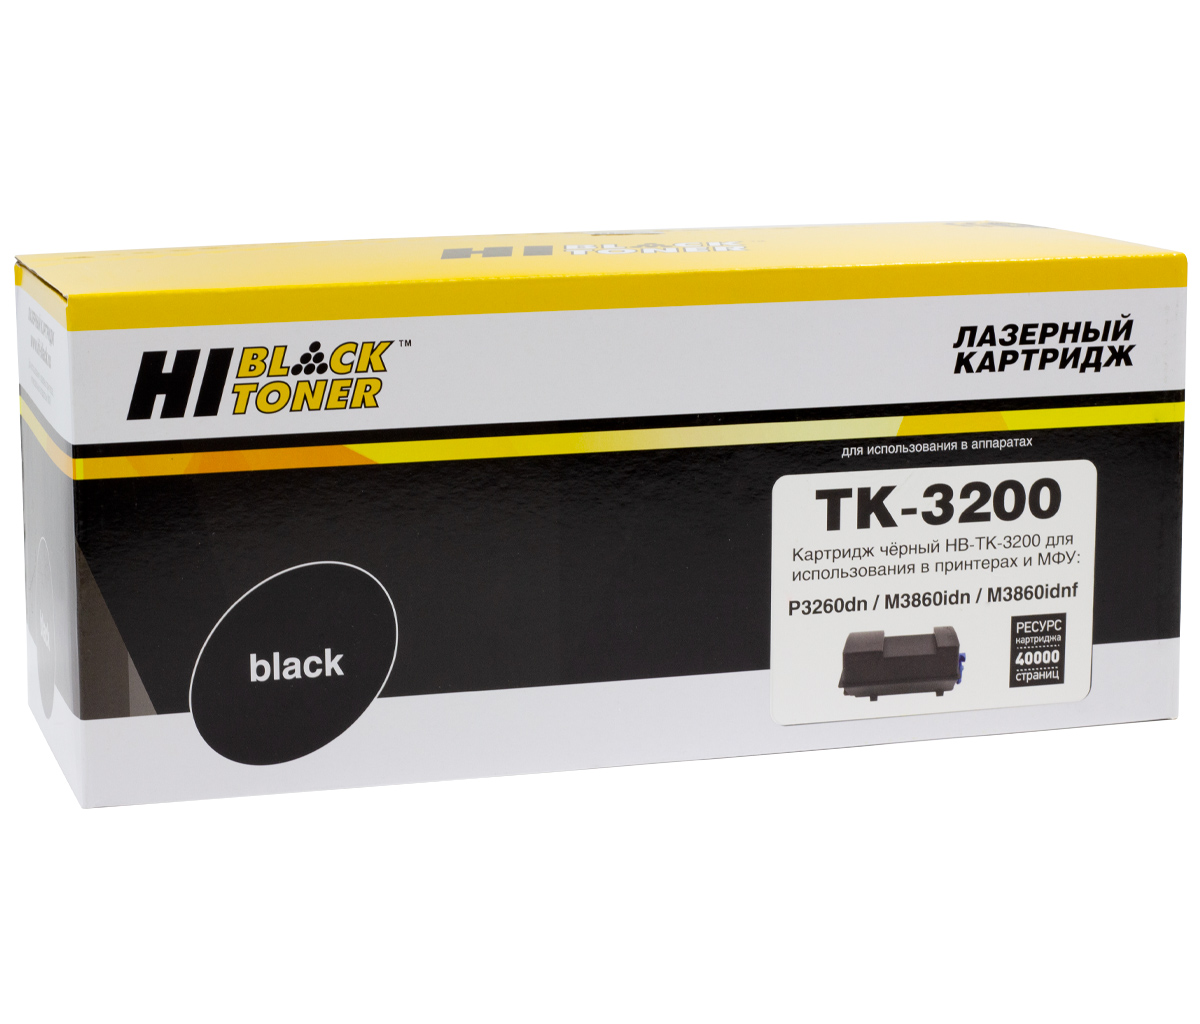 Тонер-картридж Hi-Black (HB-TK-3200) для Kyocera EcosysP3260dn/M3860idn/M3860idnf, 40K